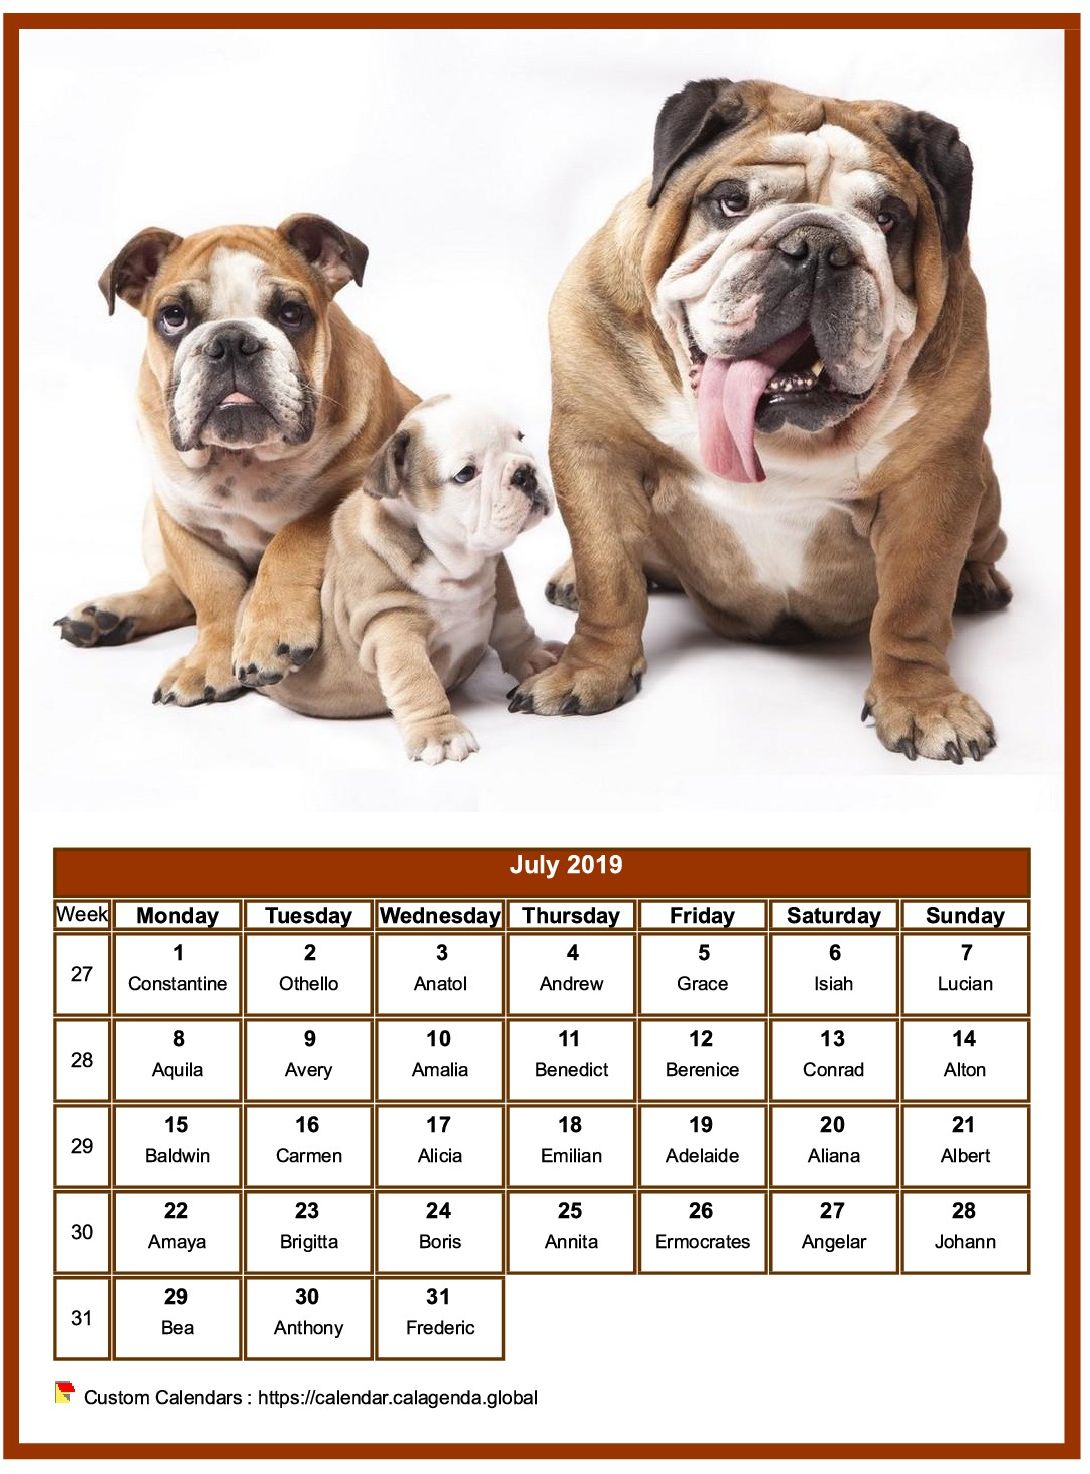 Calendar July 2019 dogs